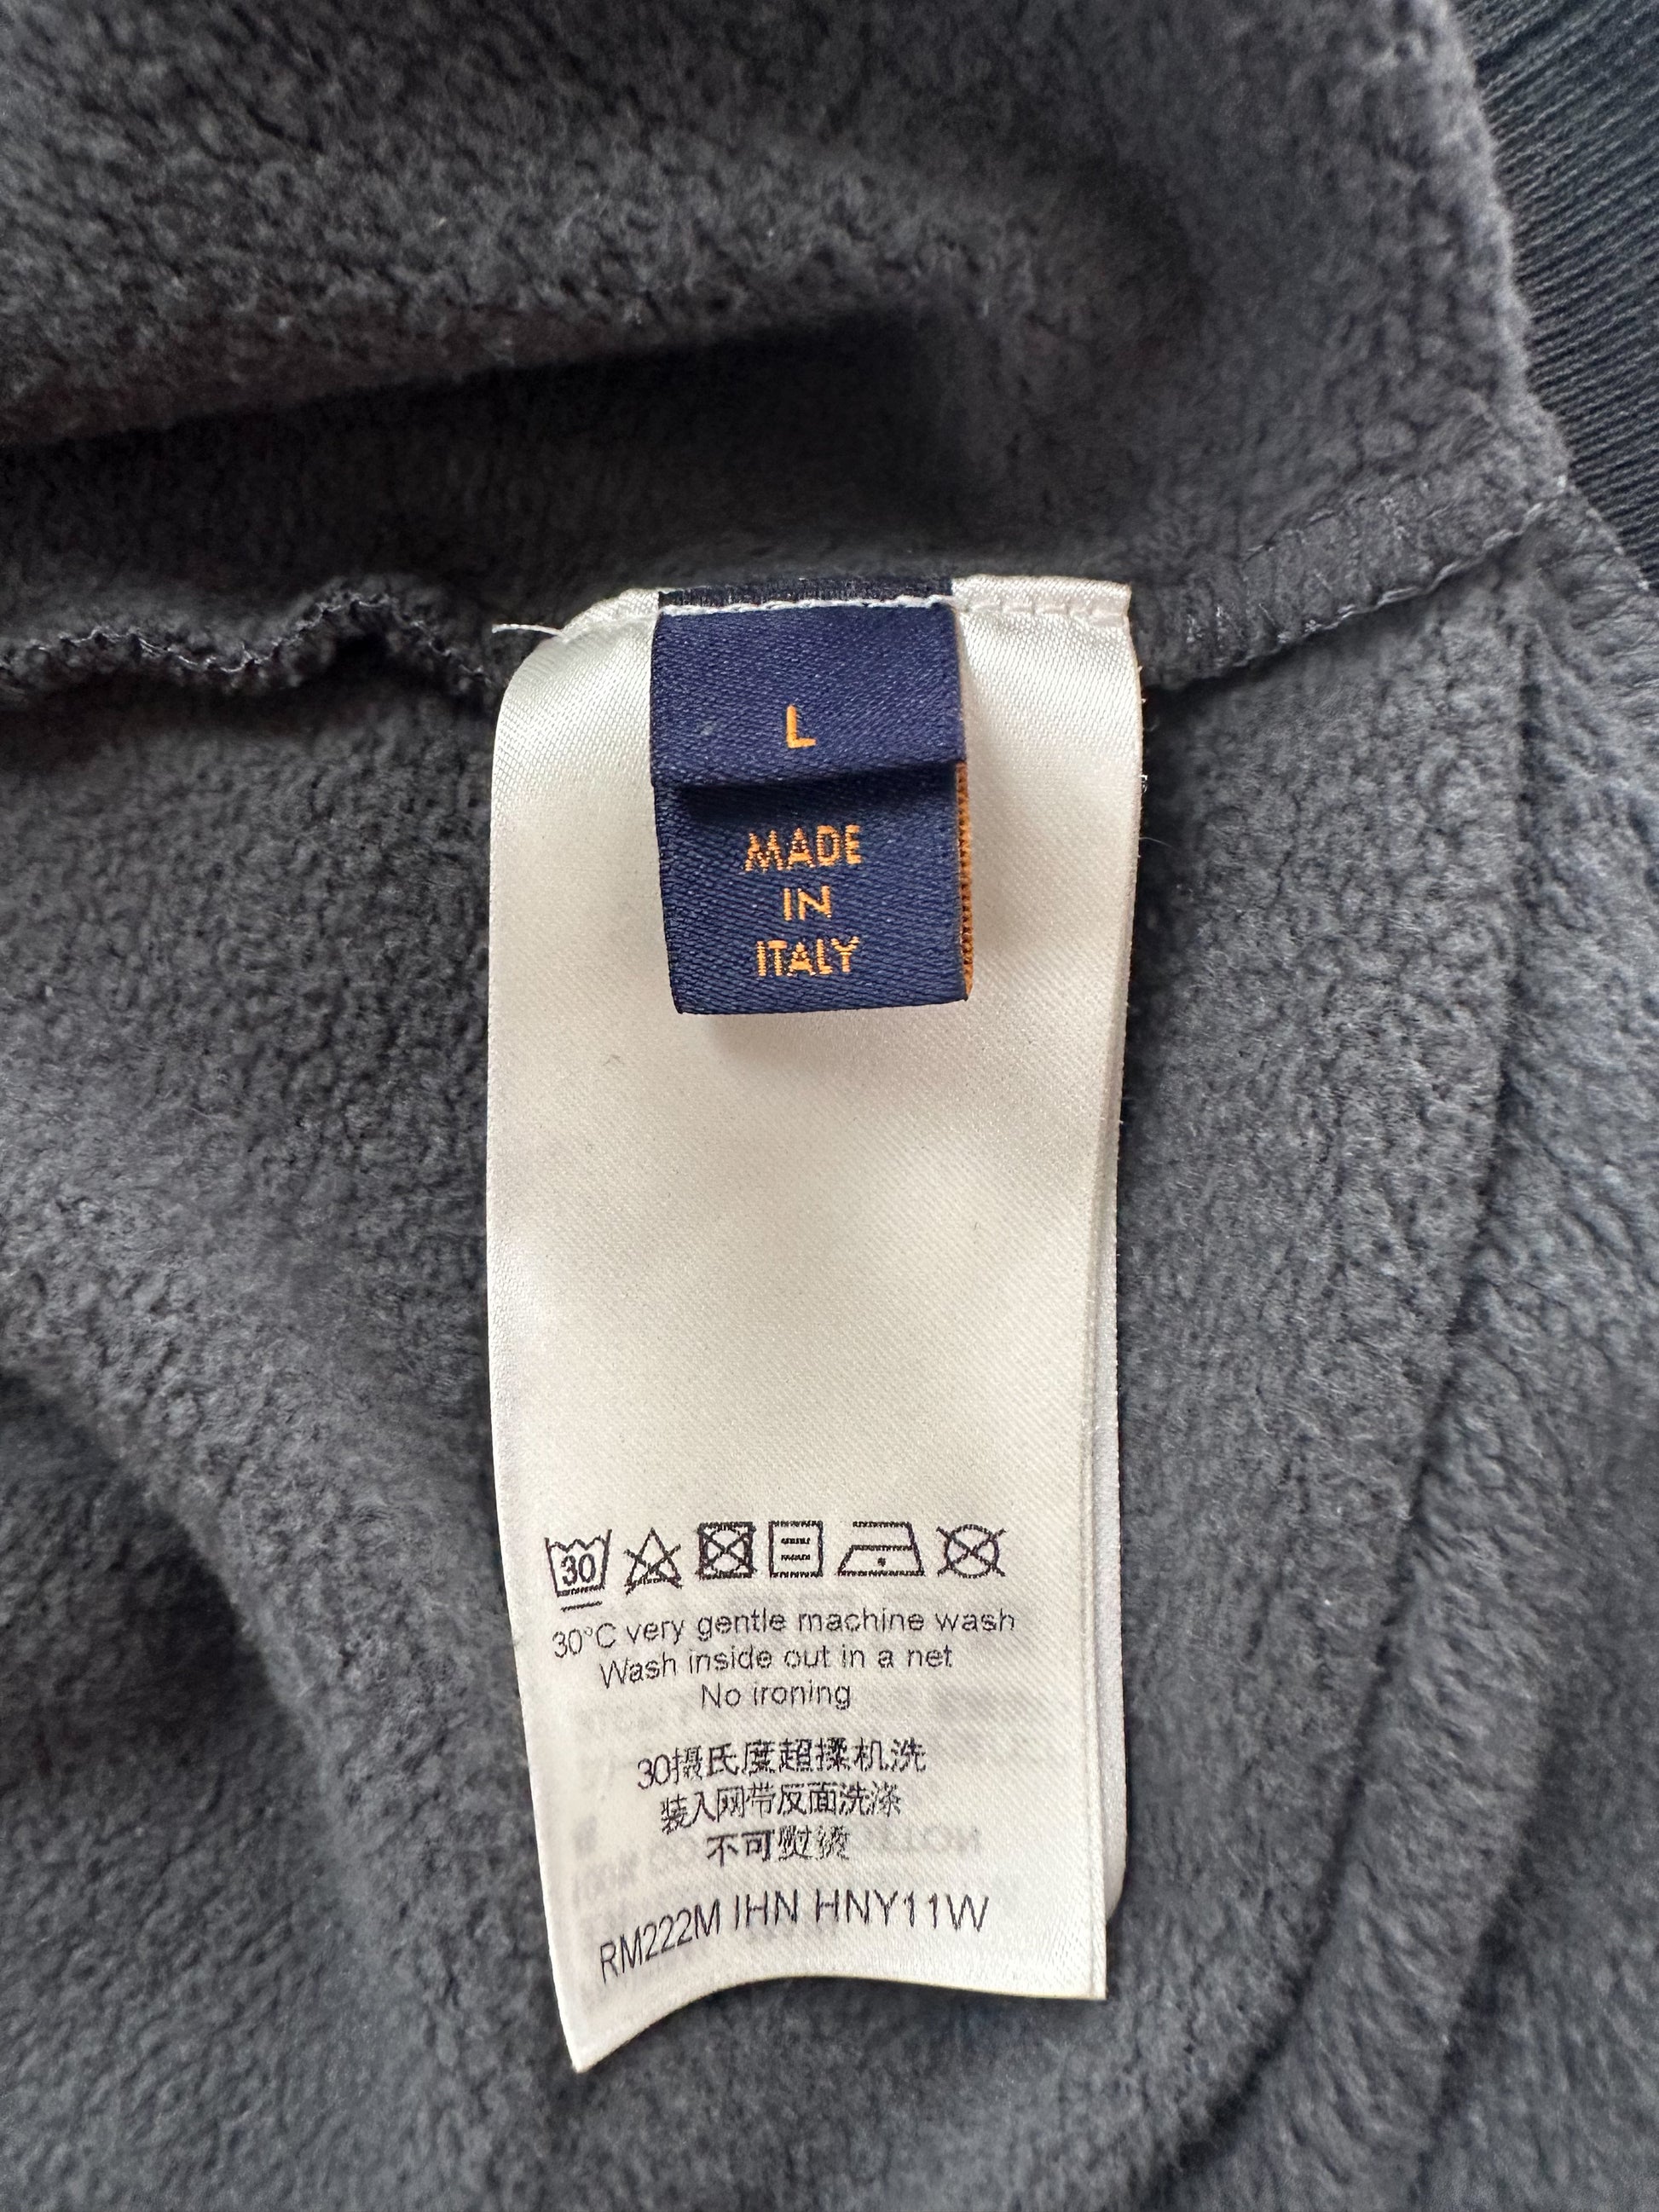 Louis Vuitton Damier Spread Jacket